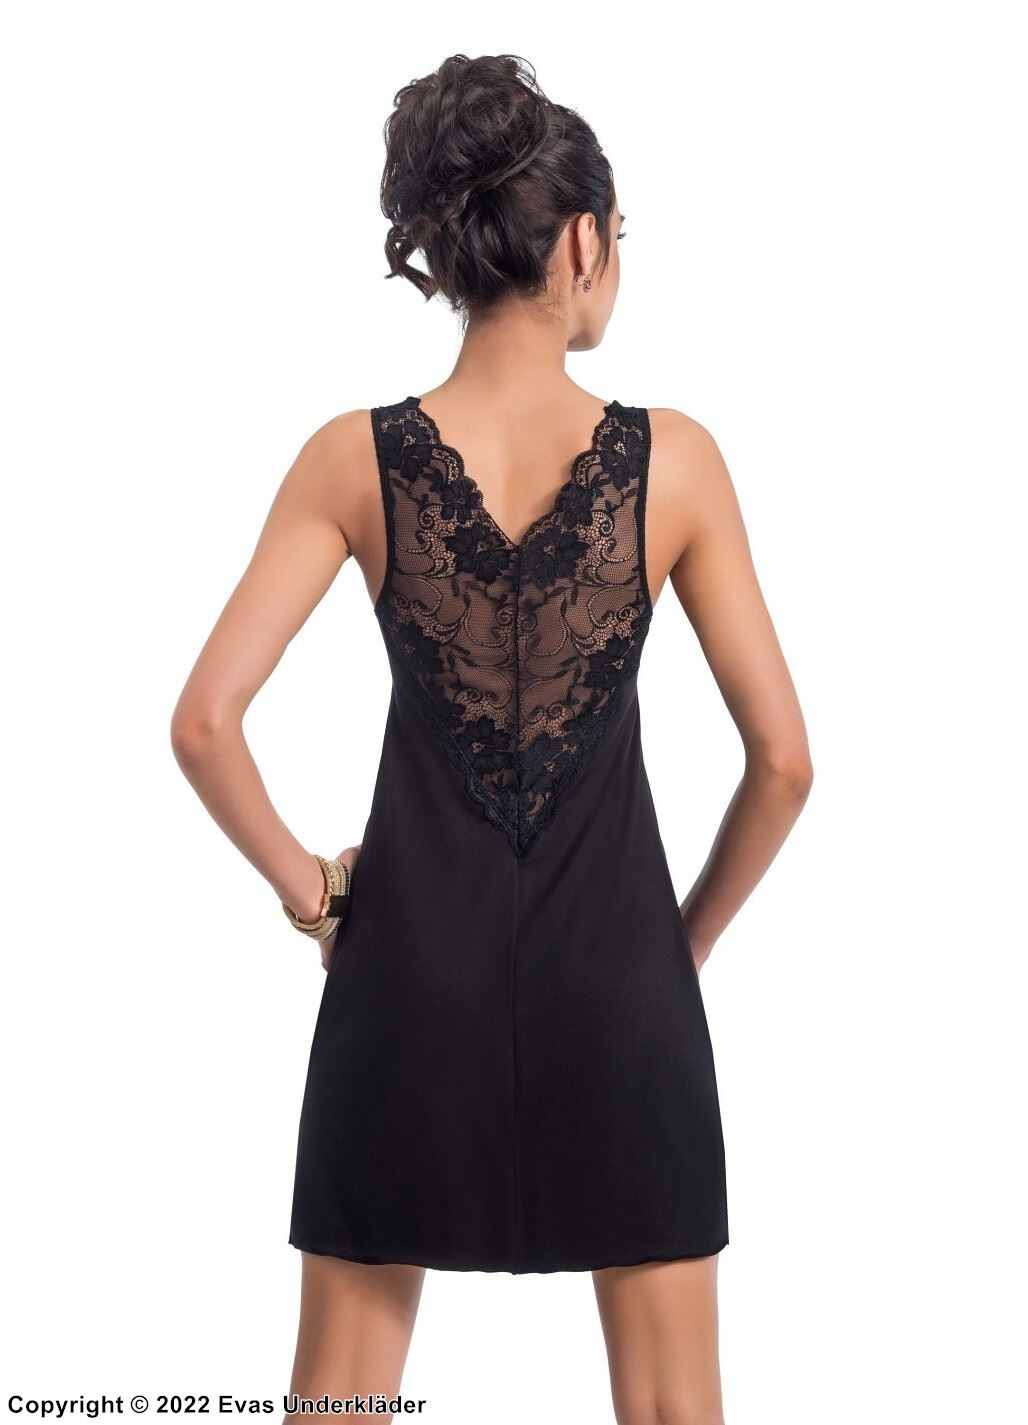 Elegant nightdress, high quality viscose, wide shoulder straps, openwork lace, flowers